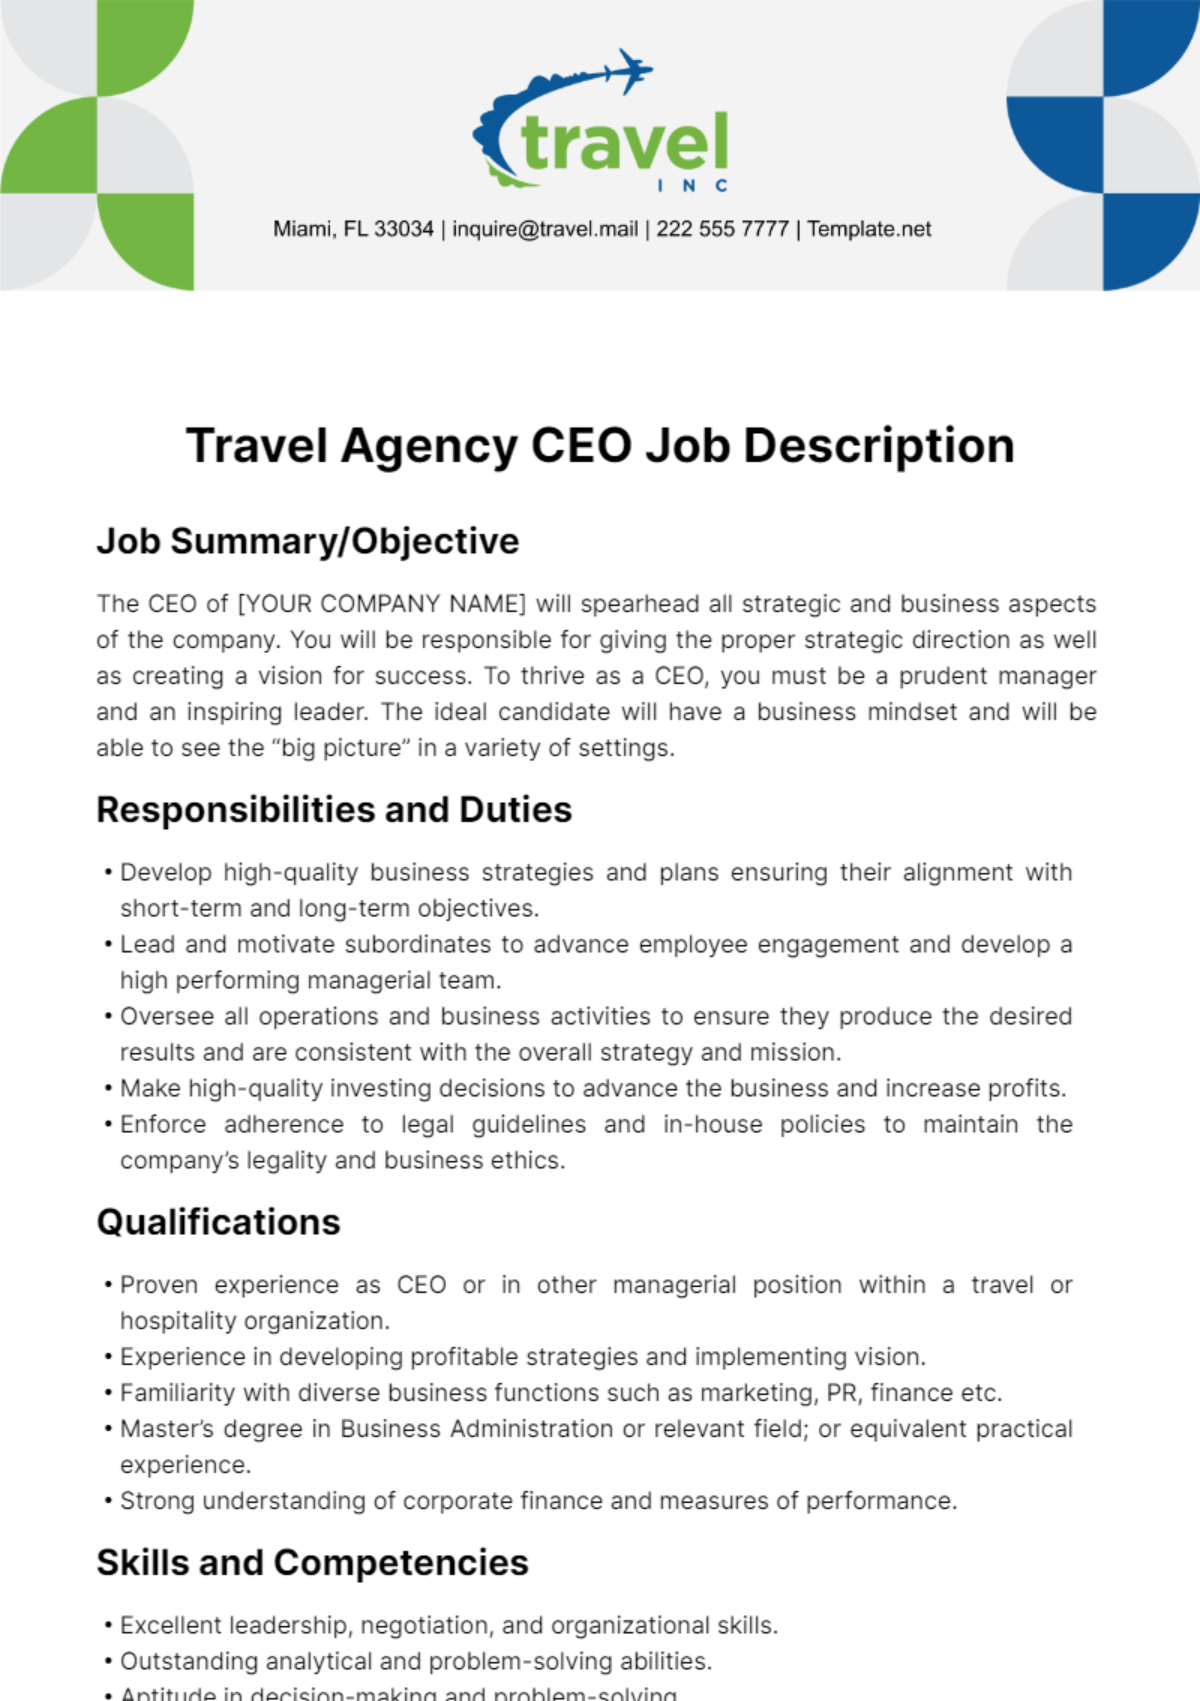 Travel Agency CEO Job Description Template